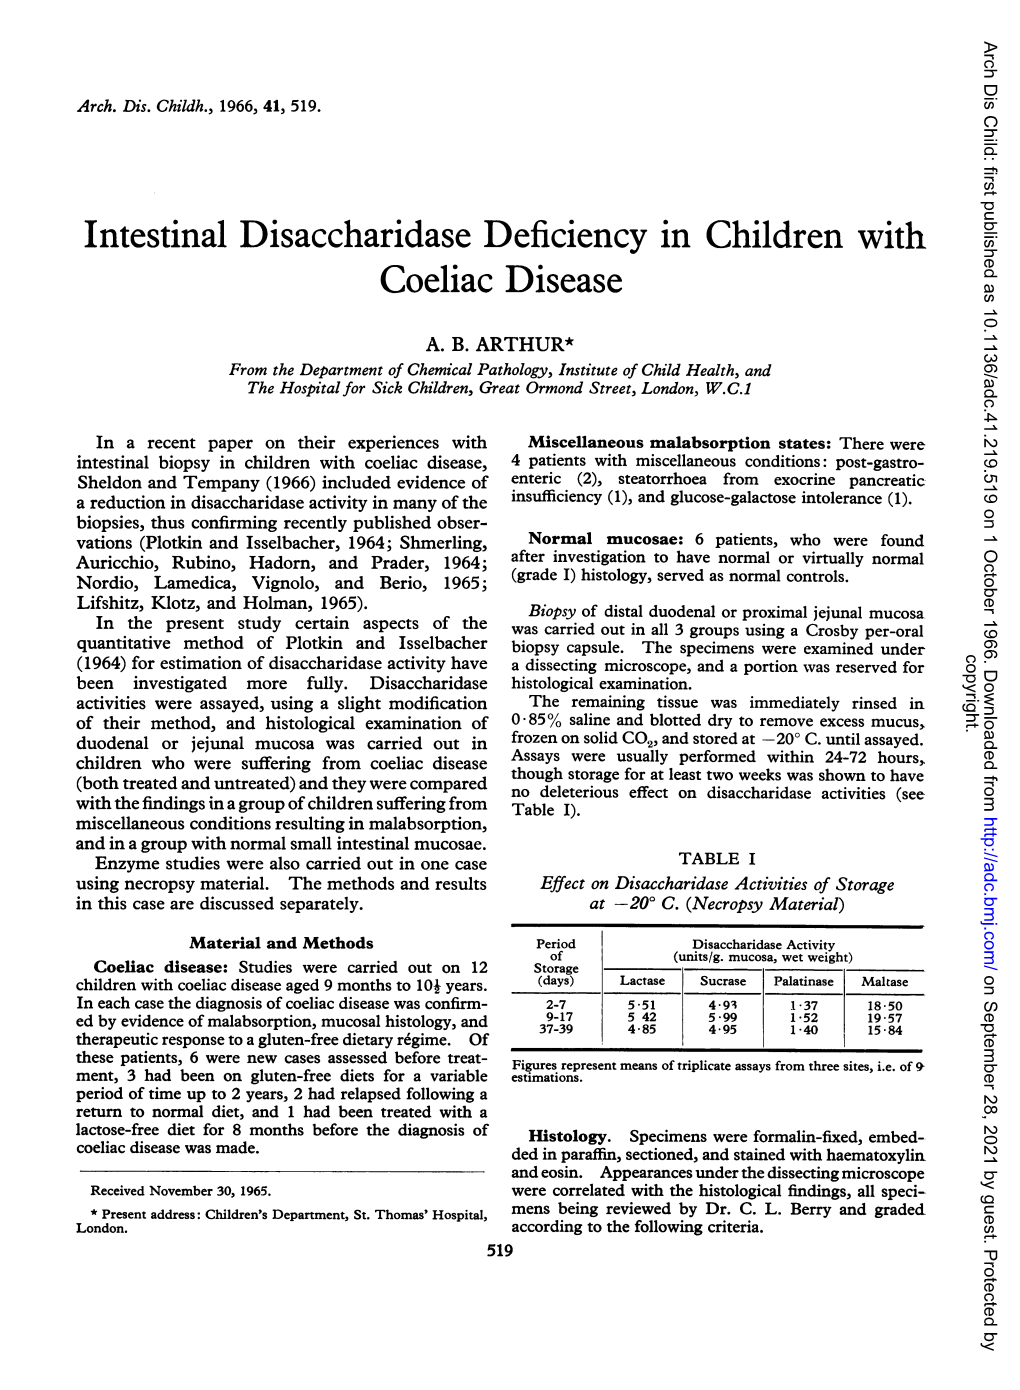 Intestinal Disaccharidase Deficiency in Children with Coeliac Disease